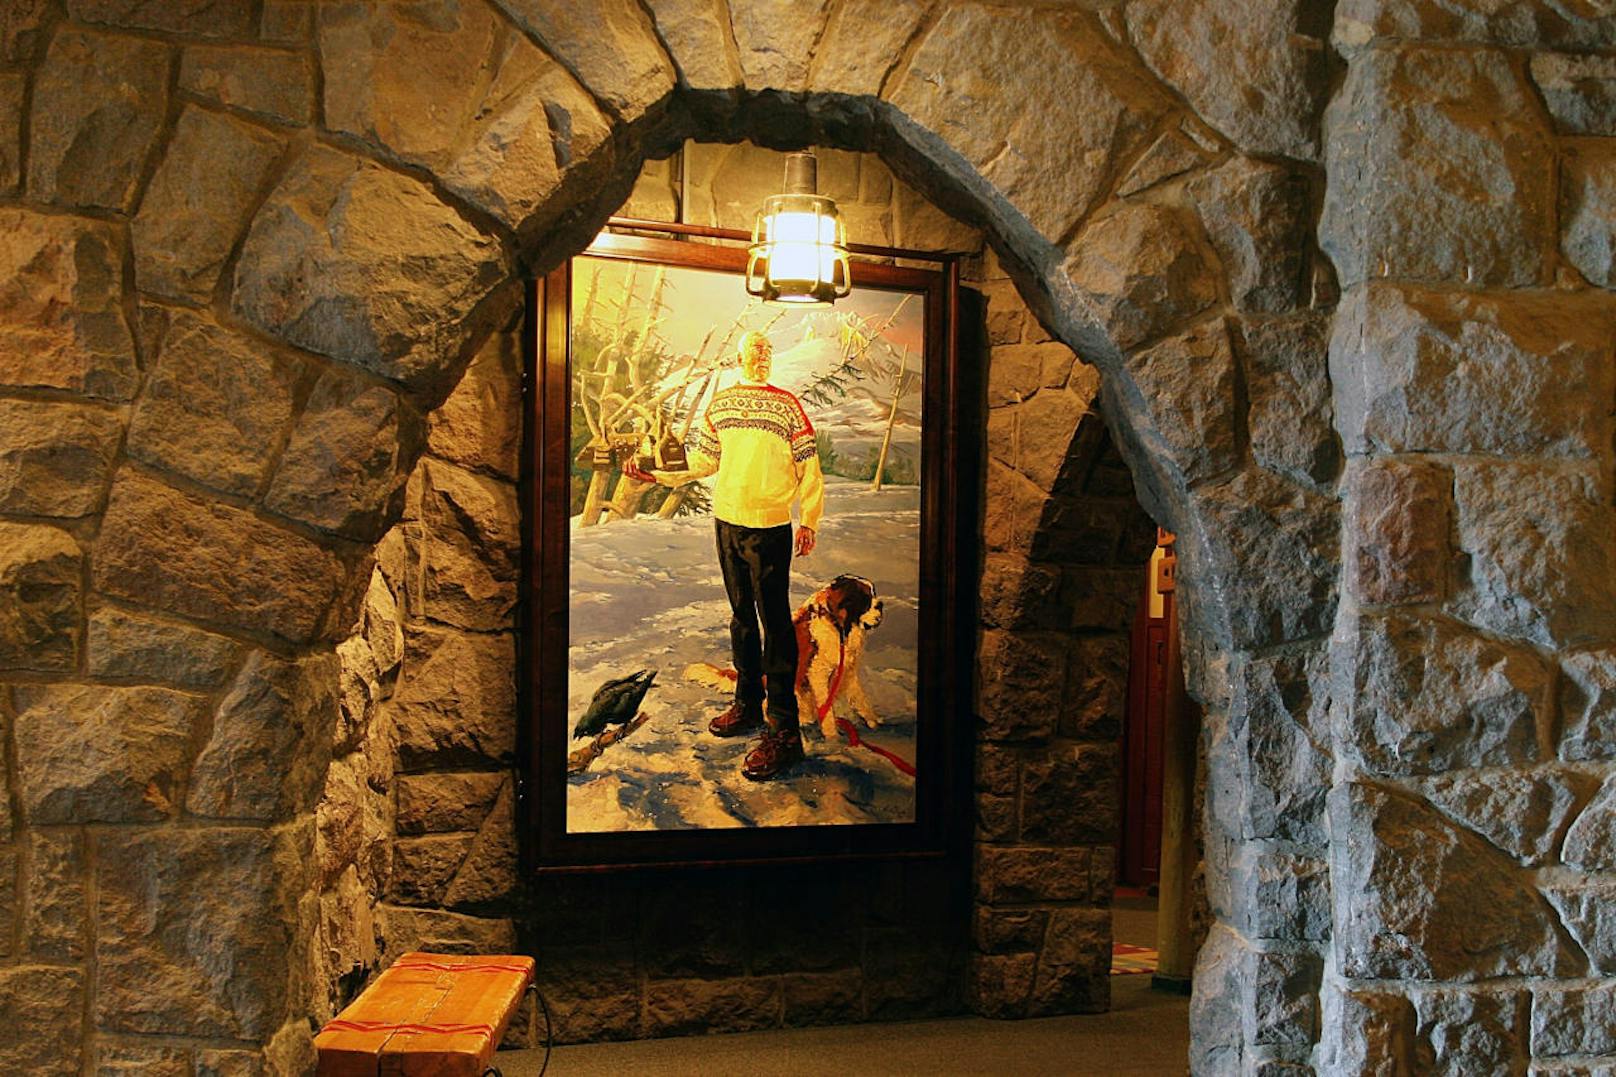 Timberline Lodge - Timberline, Oregon, USA
>>> bekannt aus "The Shining"